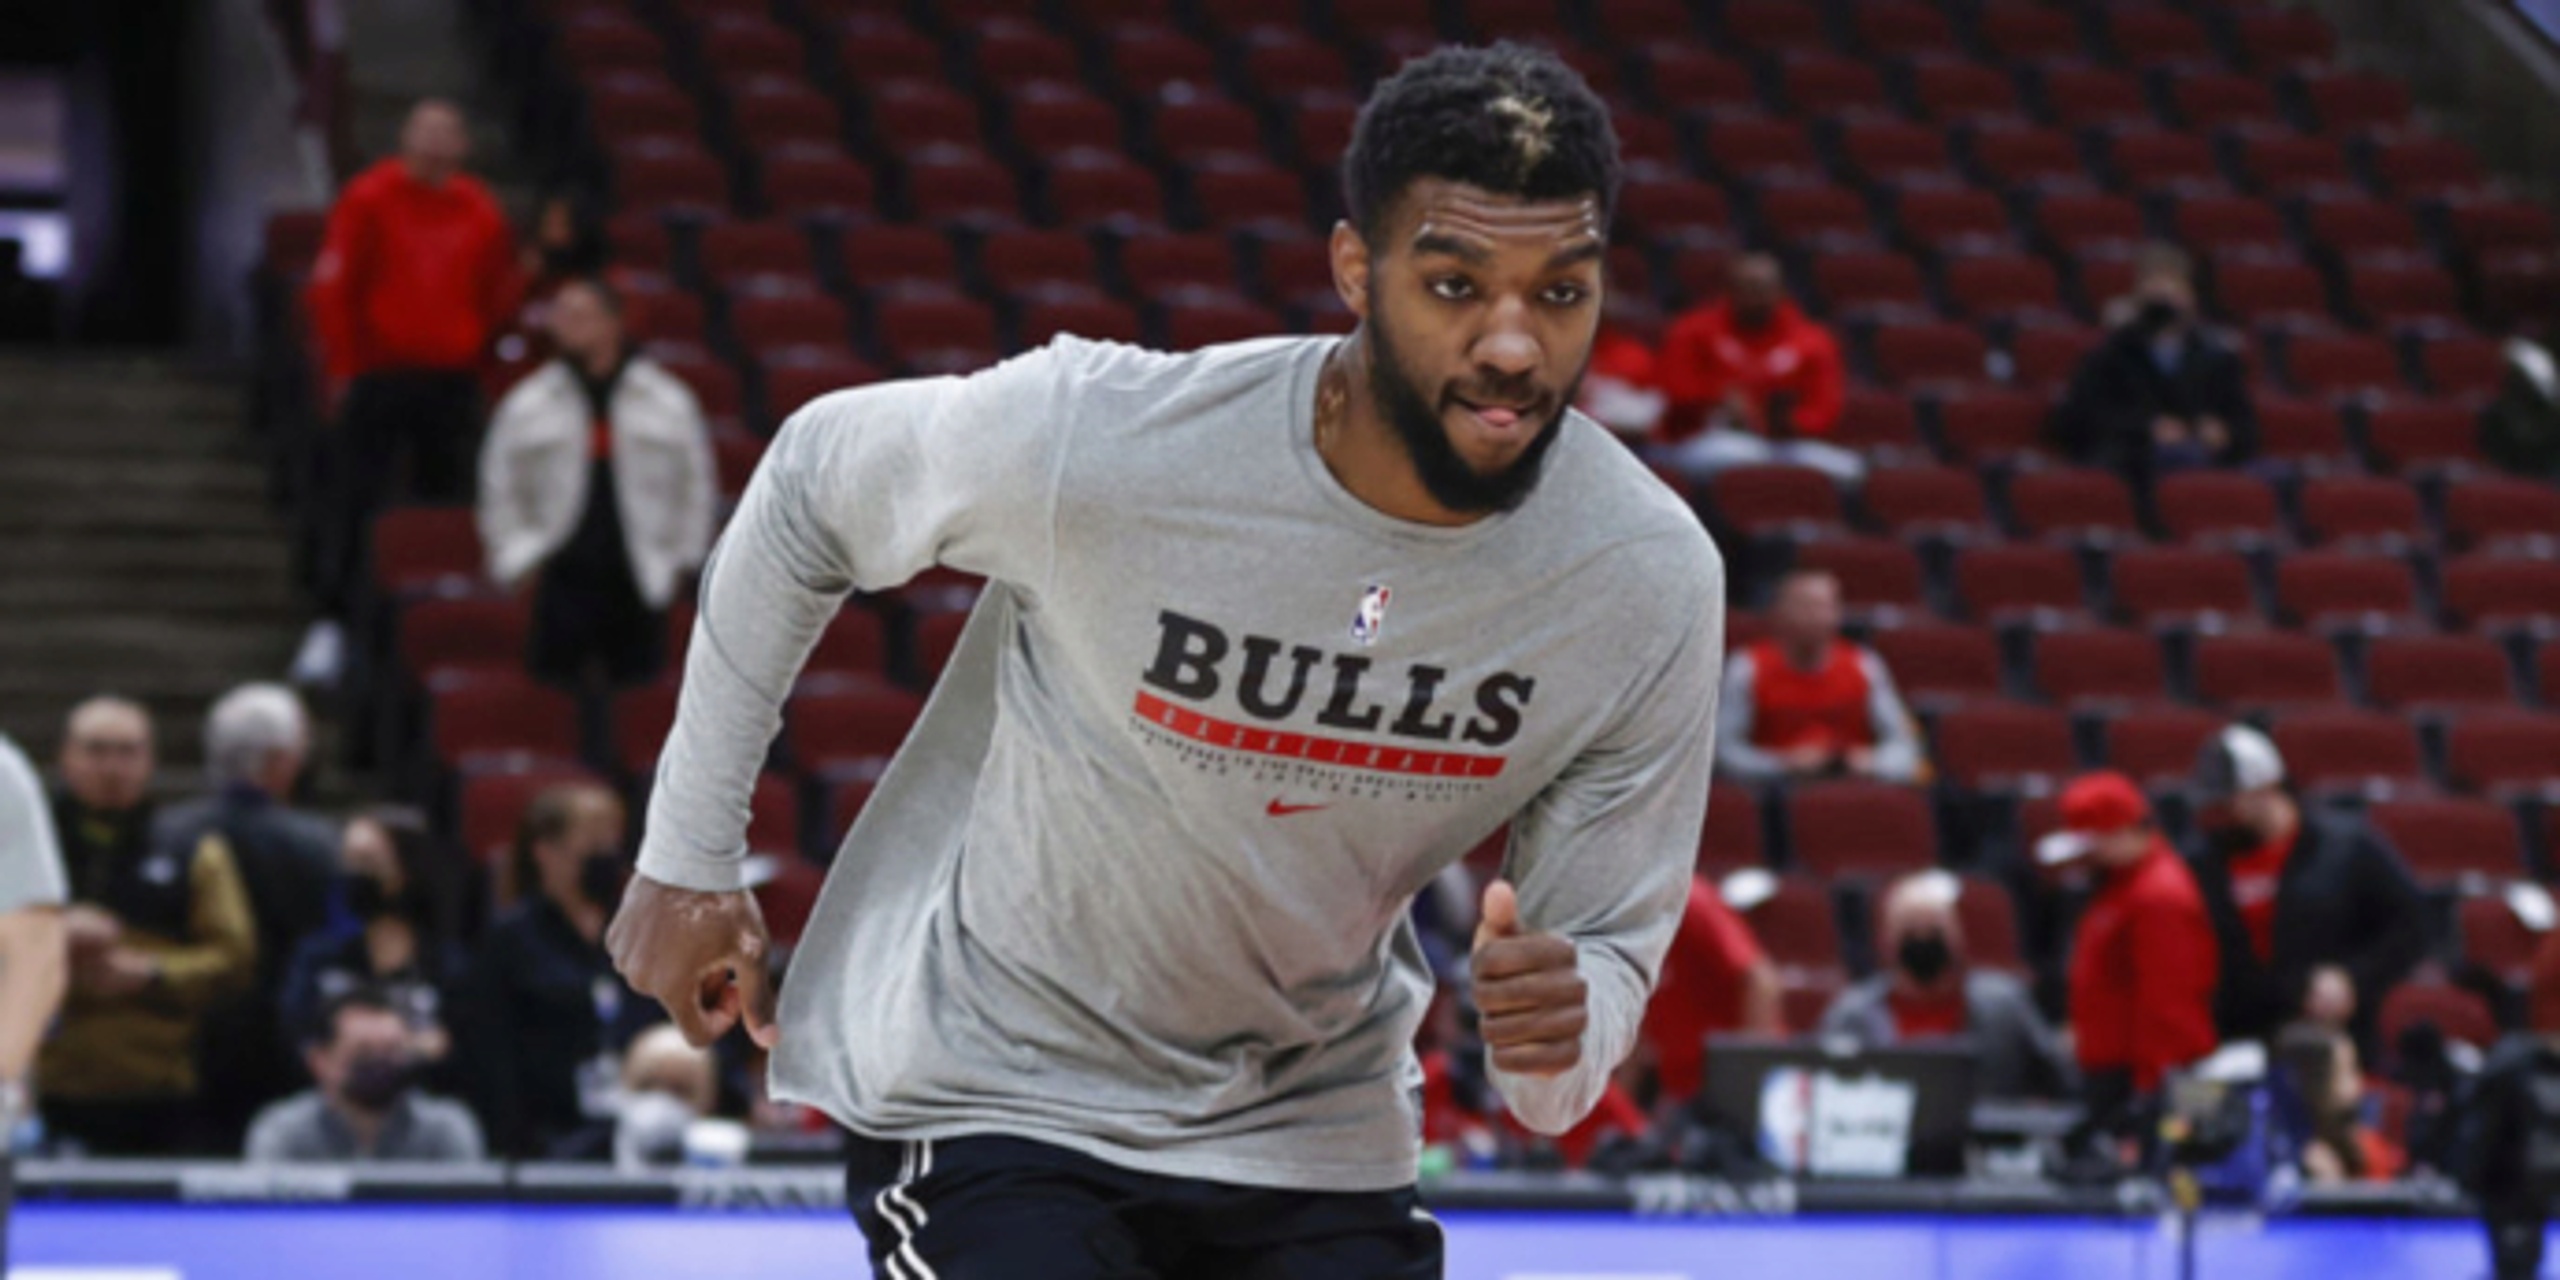 Bulls' forward Patrick Williams will return from injury on Monday